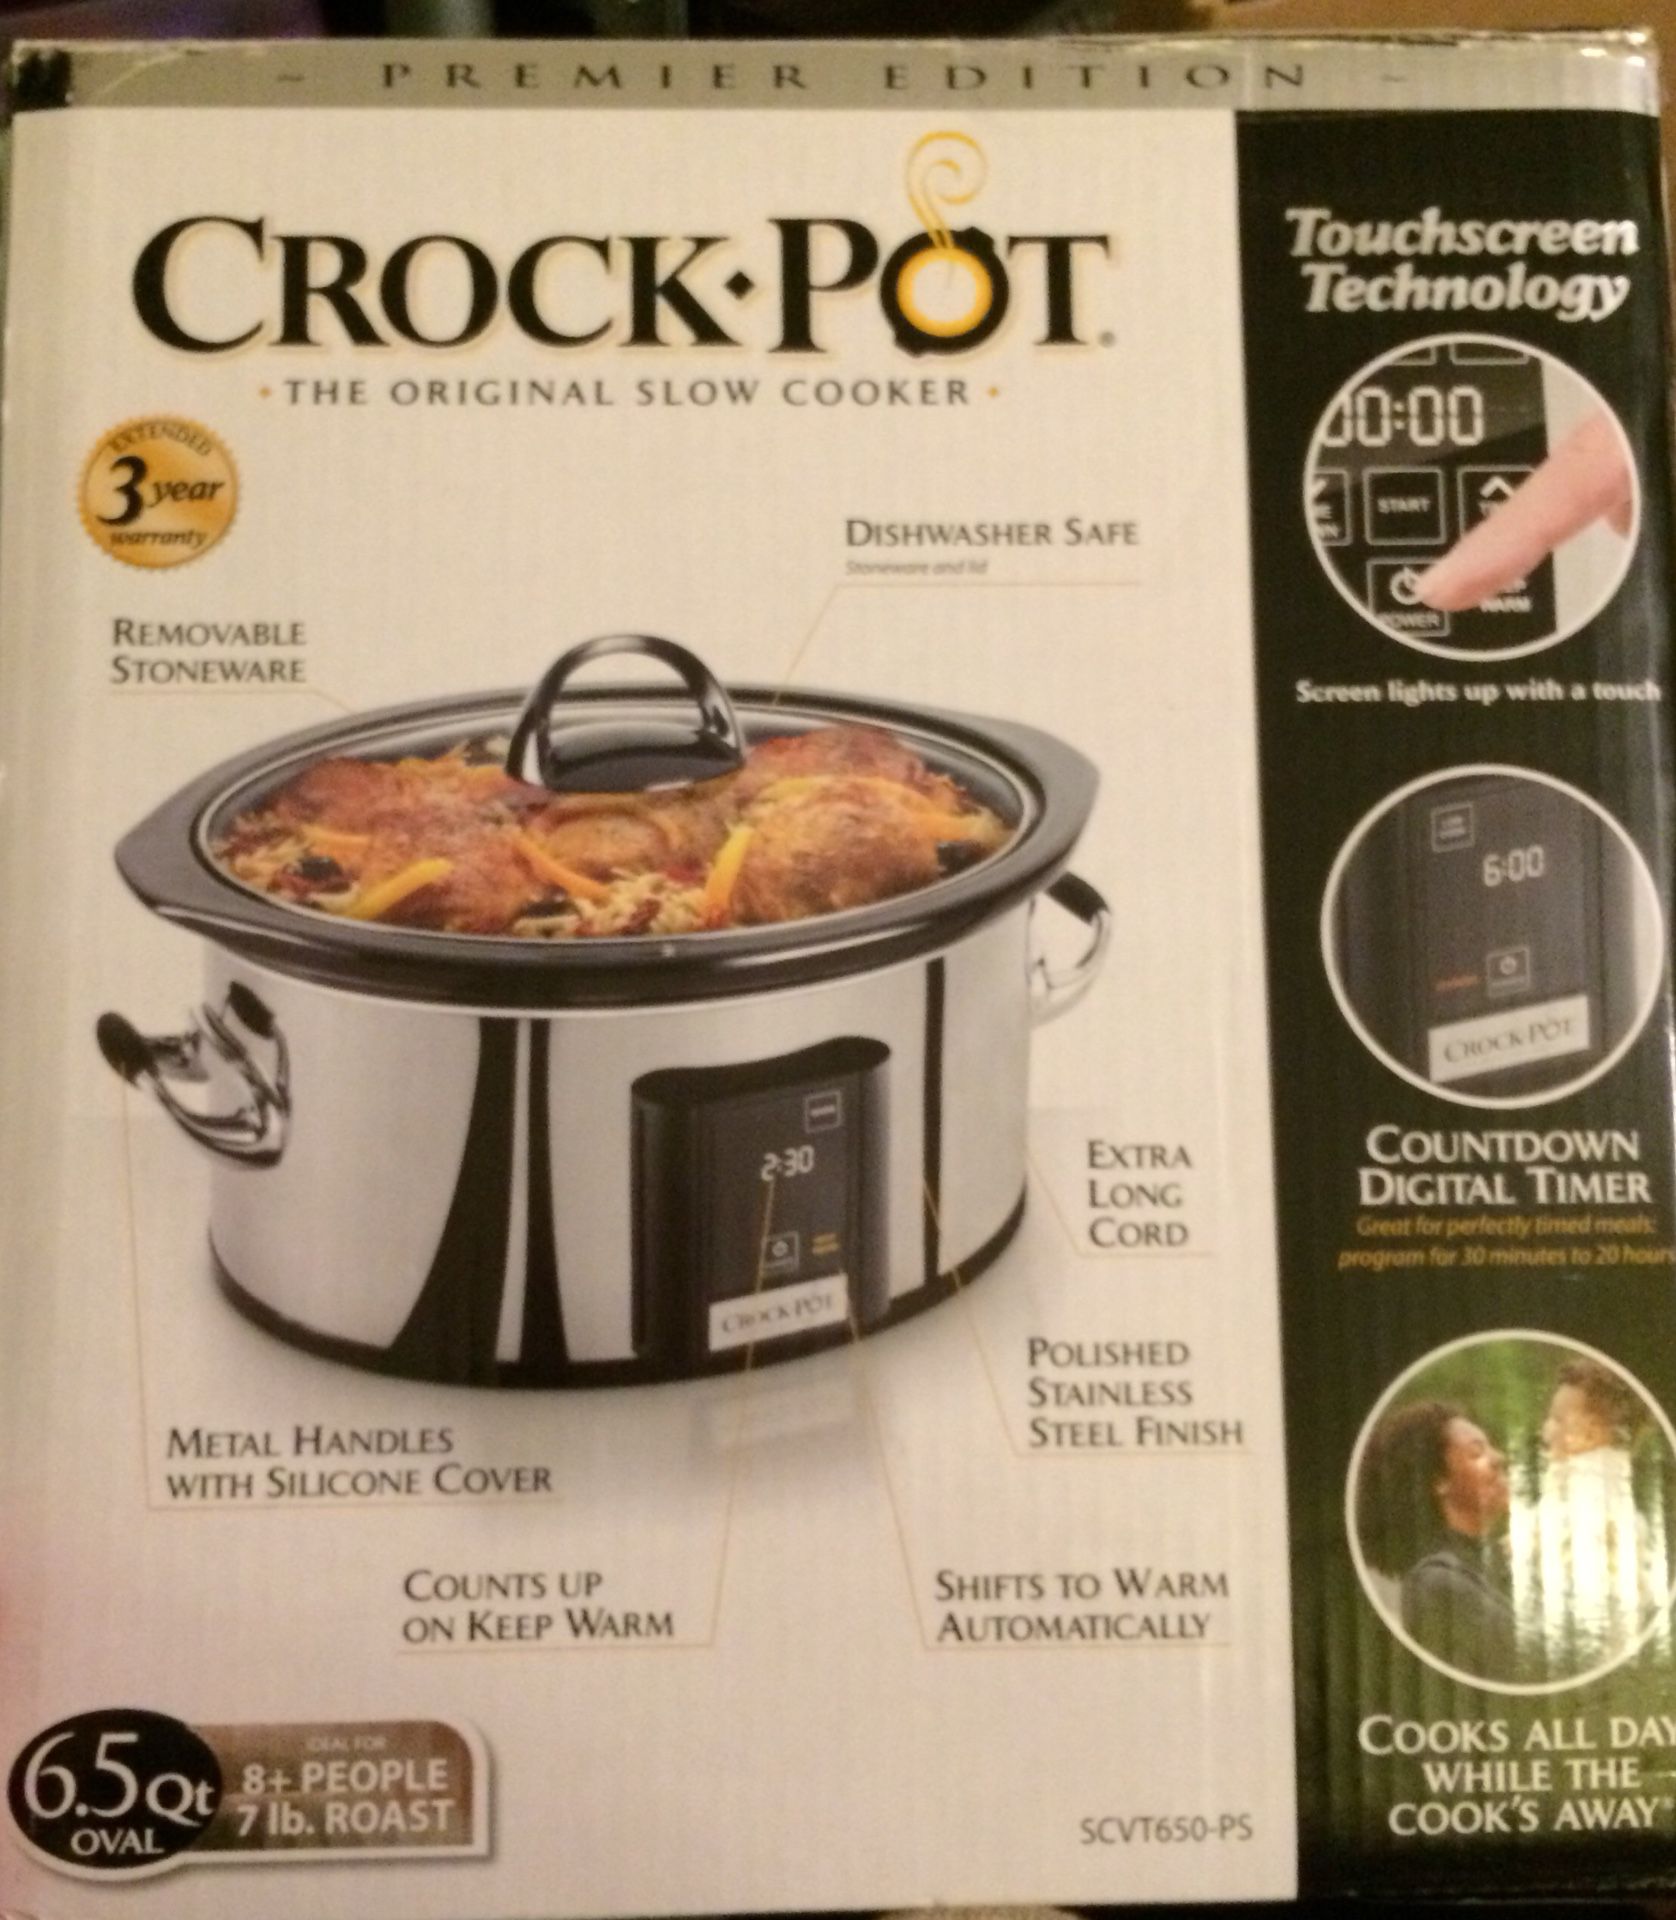 Crock-Pot Programmable Touchscreen Slow Cooker, Stainless Steel, 6.5 qt